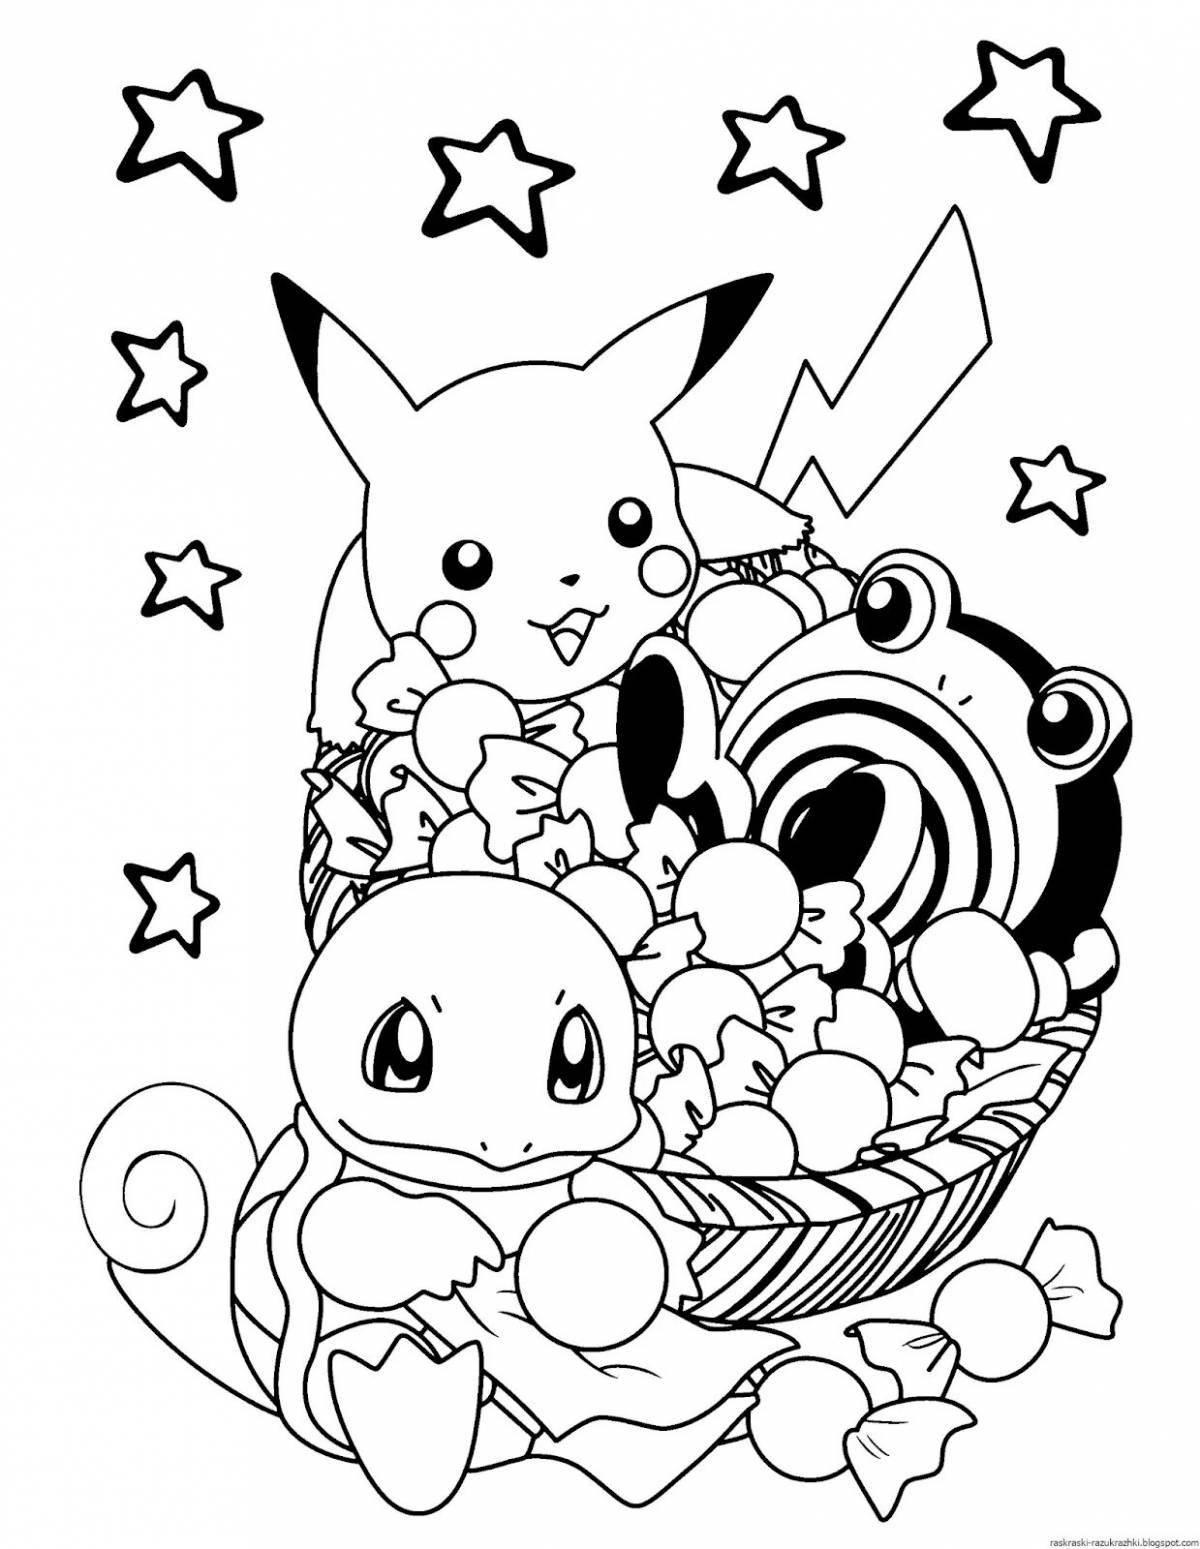 Fun Pikachu Christmas coloring book